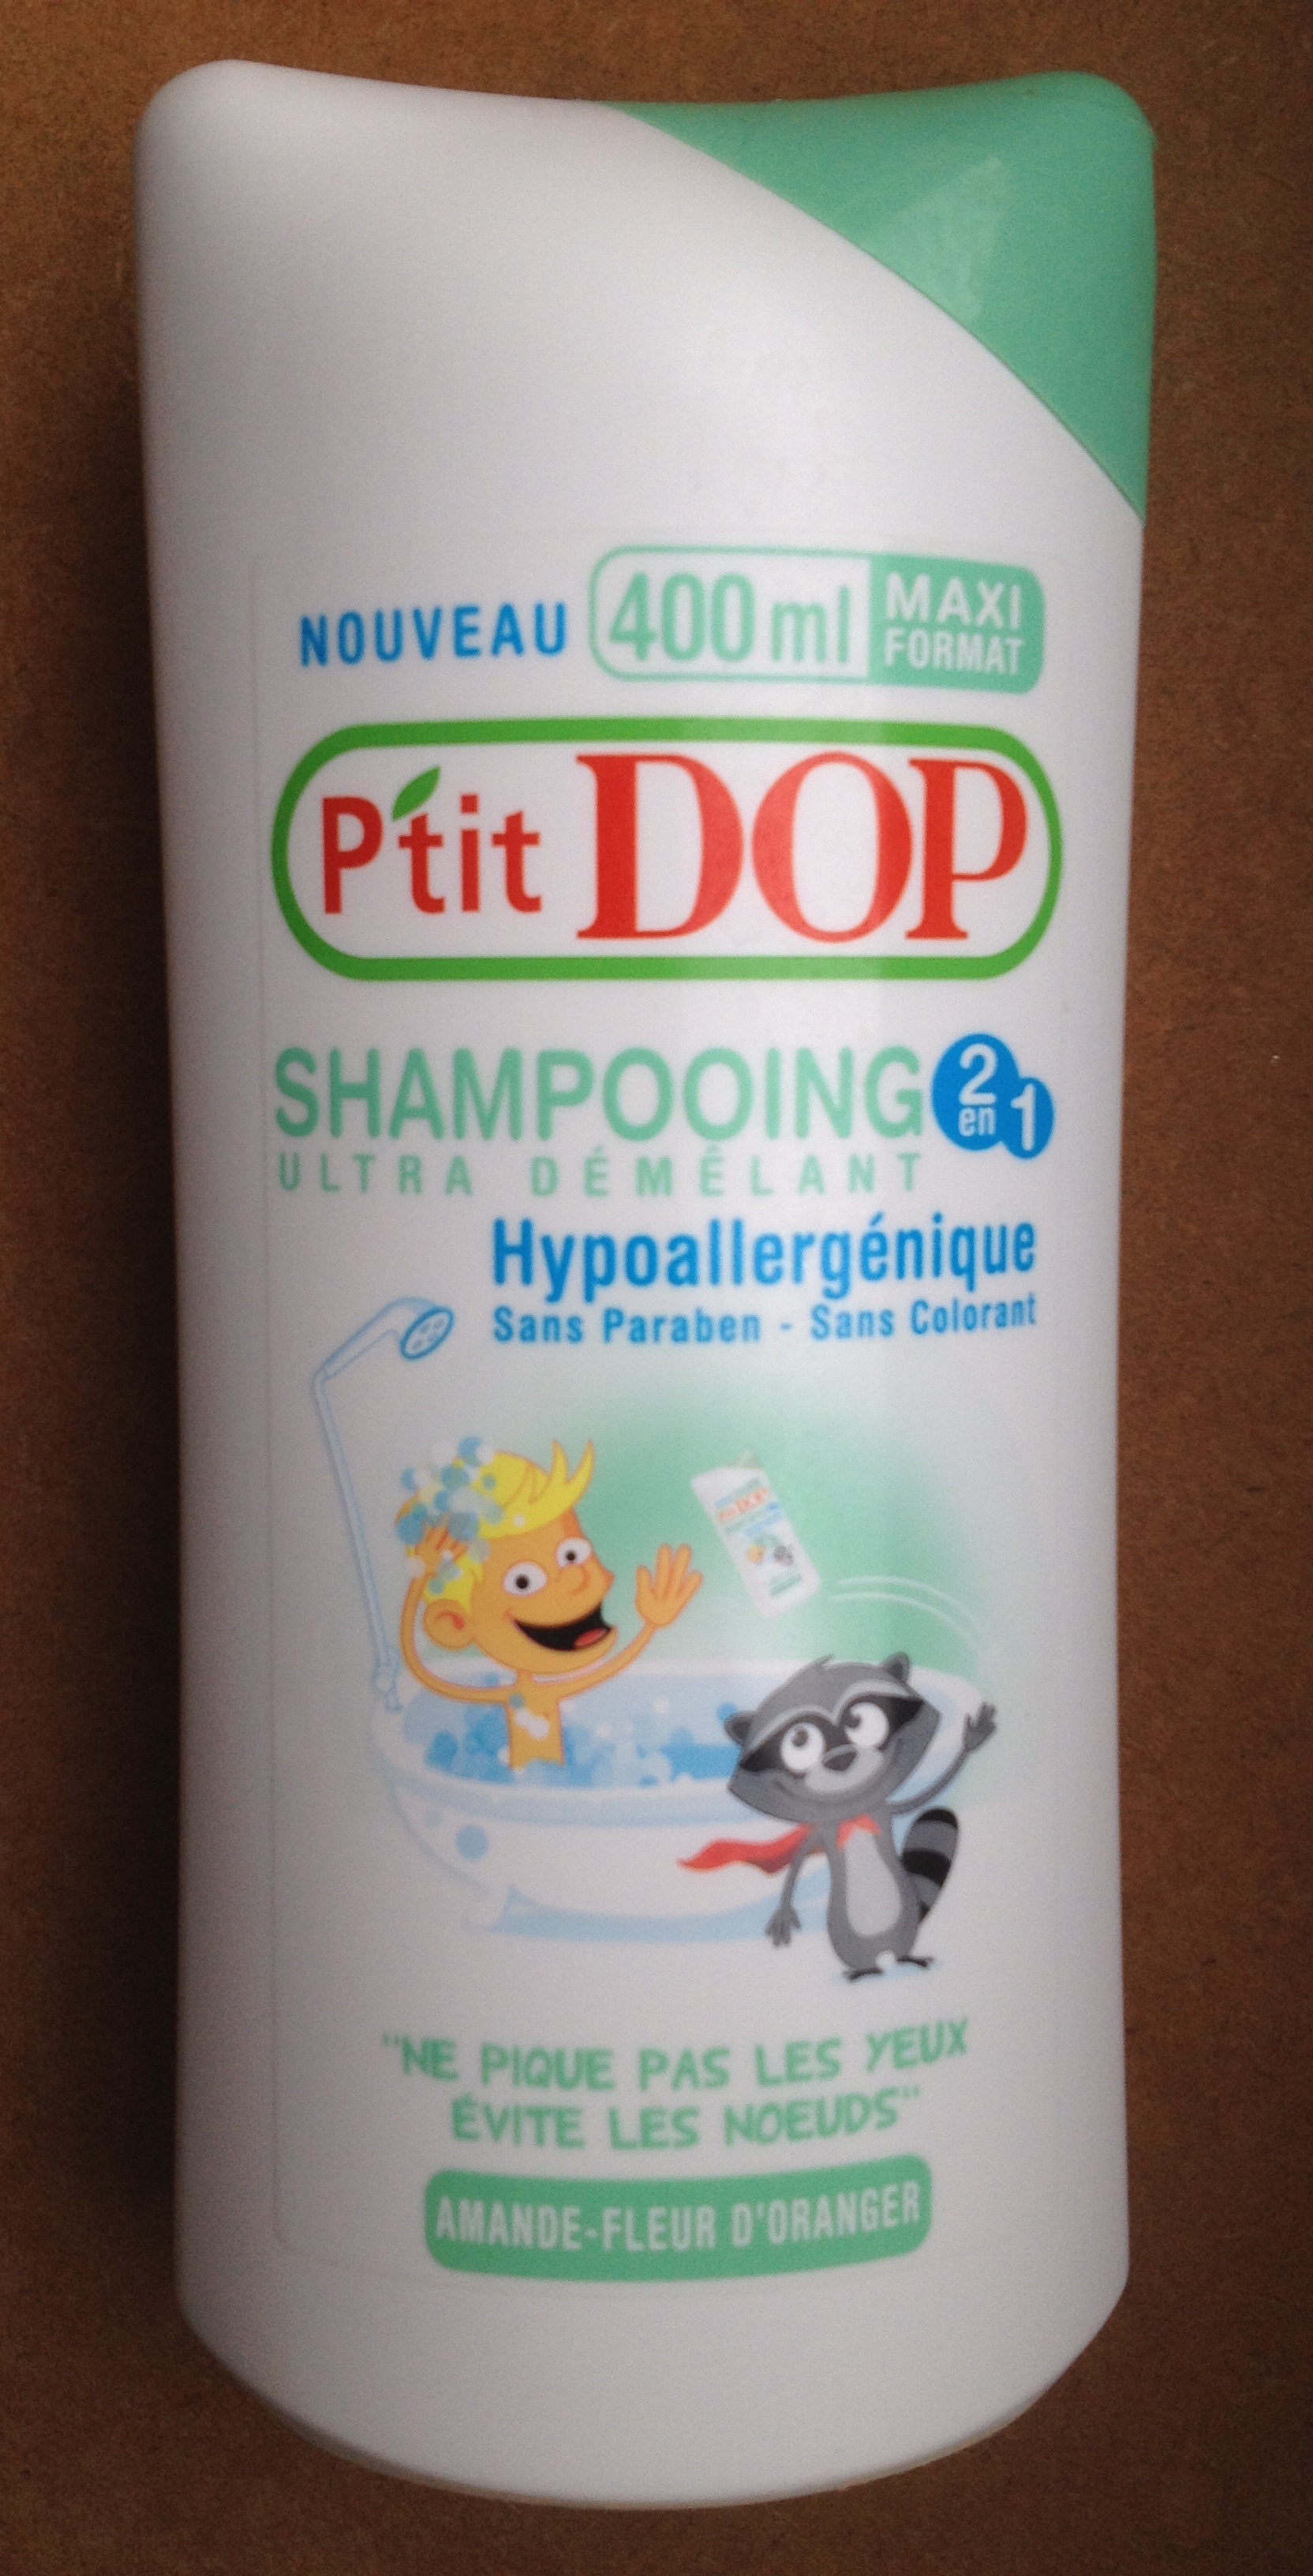 Shampoing 2 en 1 ultra démêlant Amande - Fleur d'Oranger - Product - fr